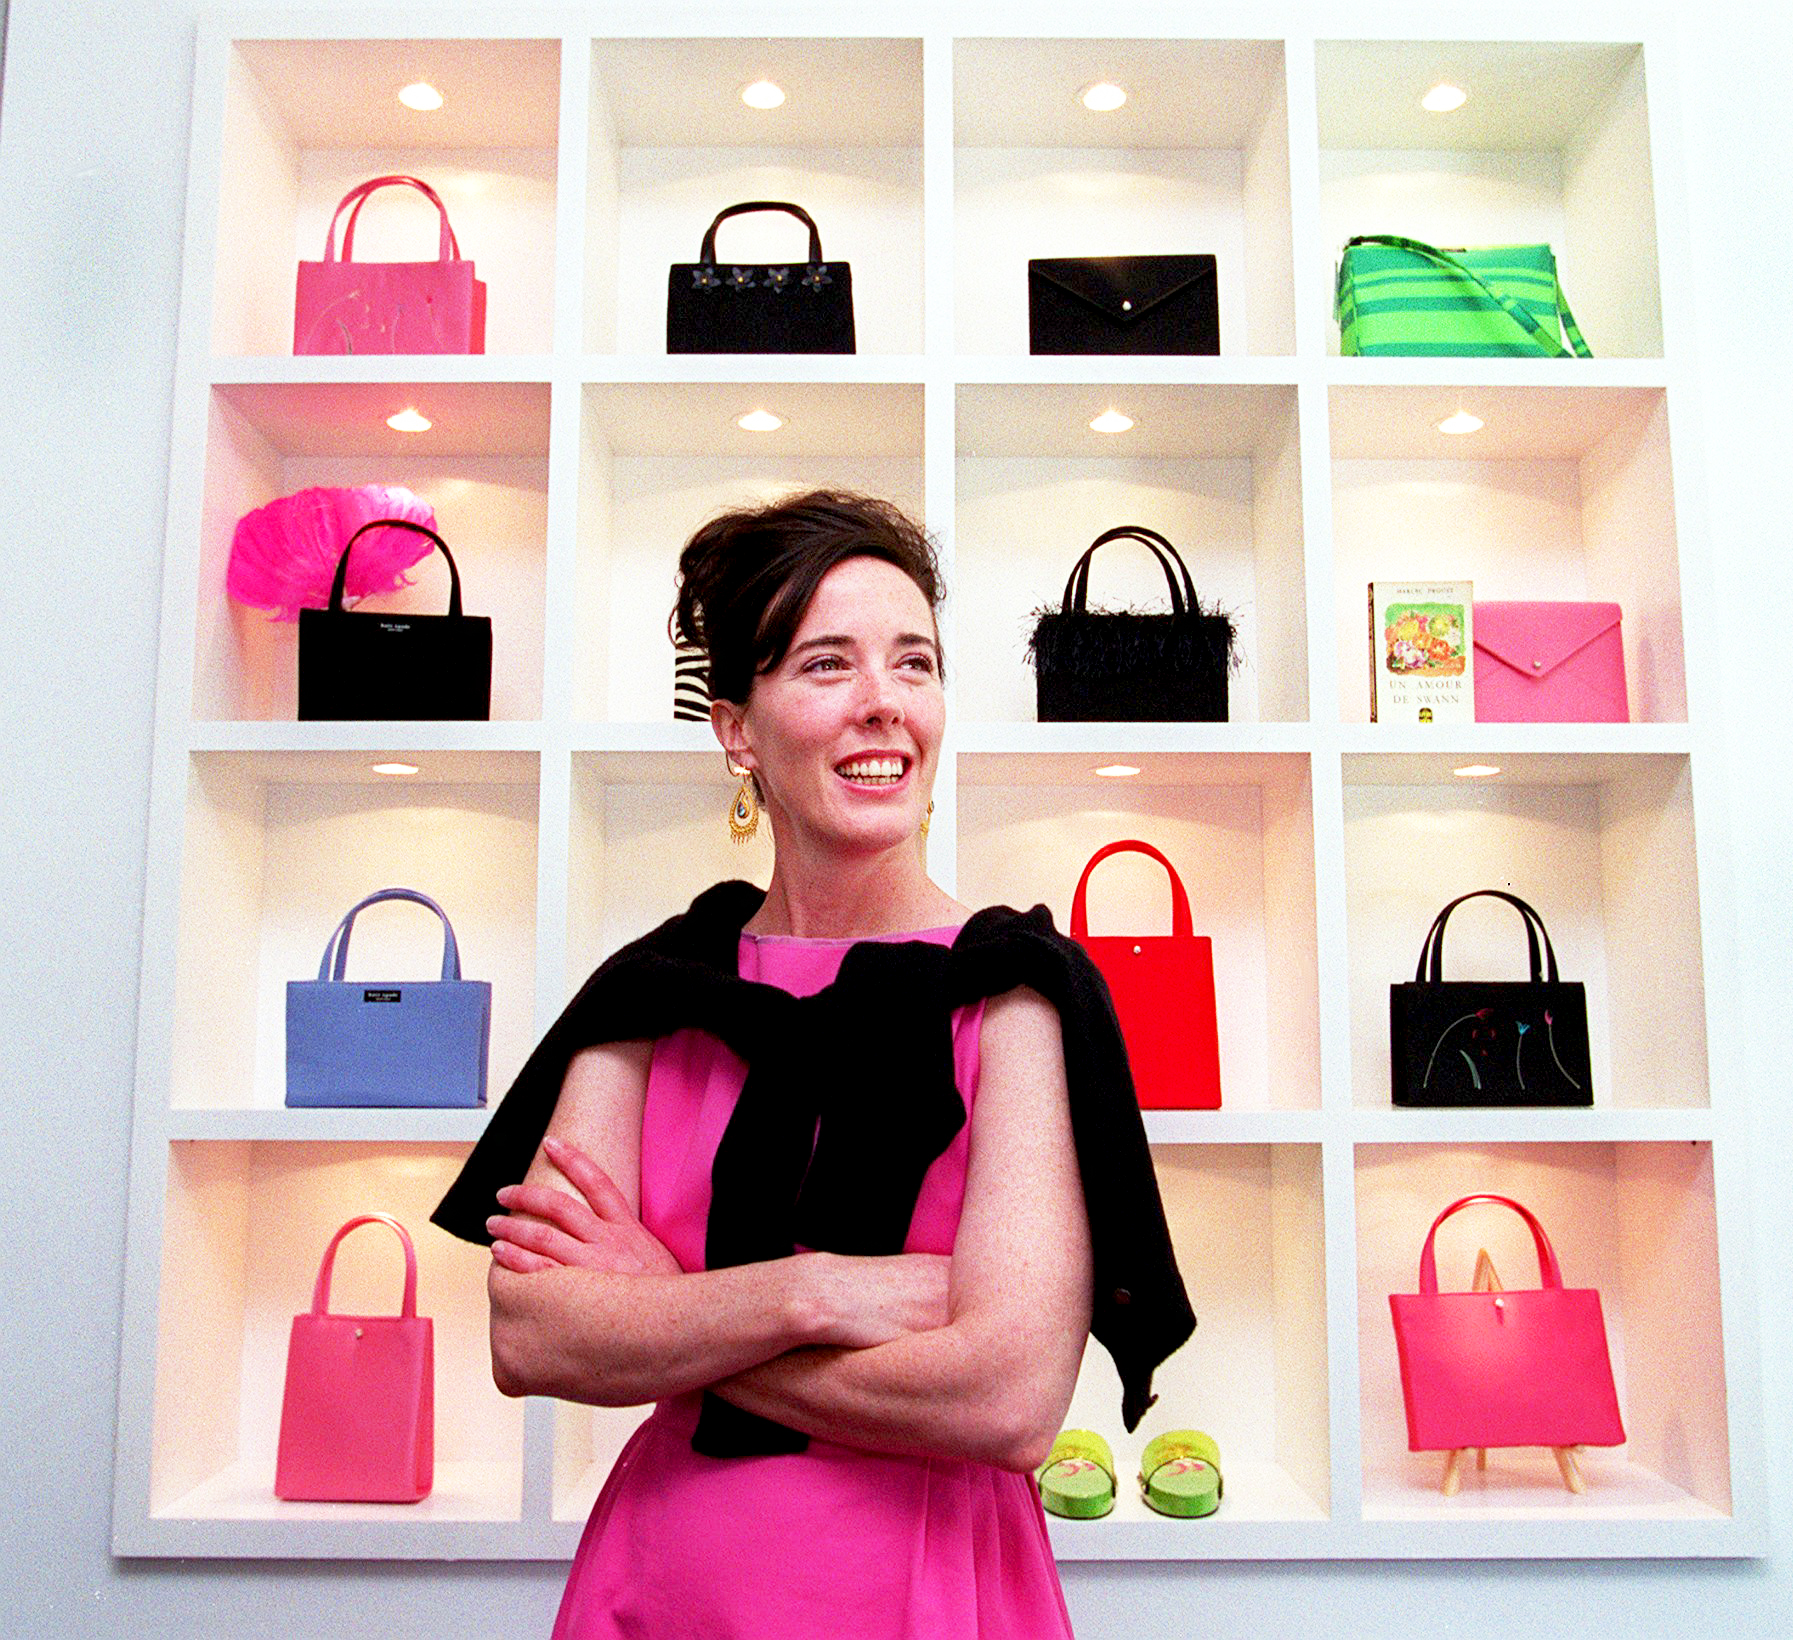 Handbag Designer By Kate Spade Size: Small